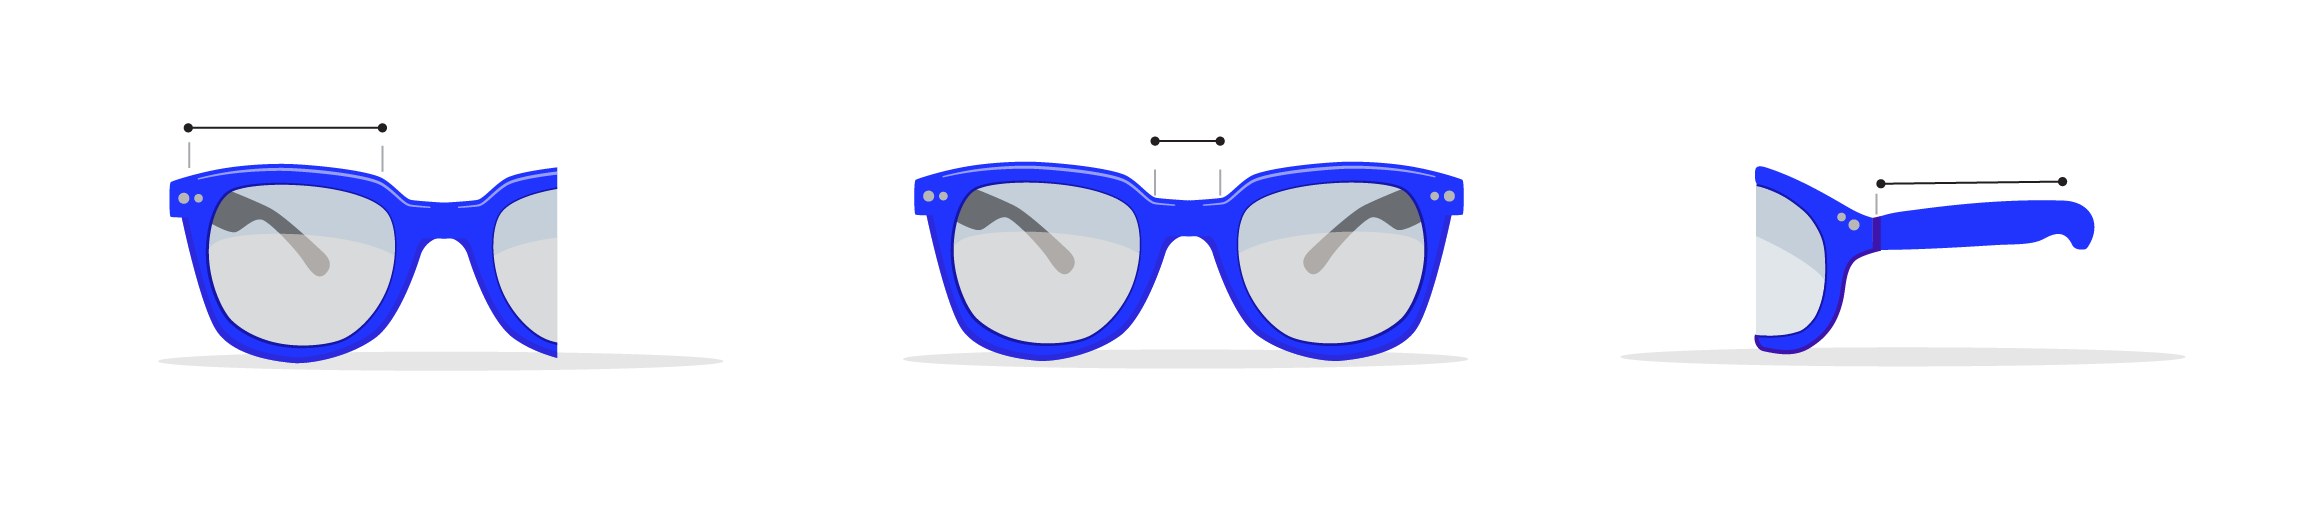 glasses_size